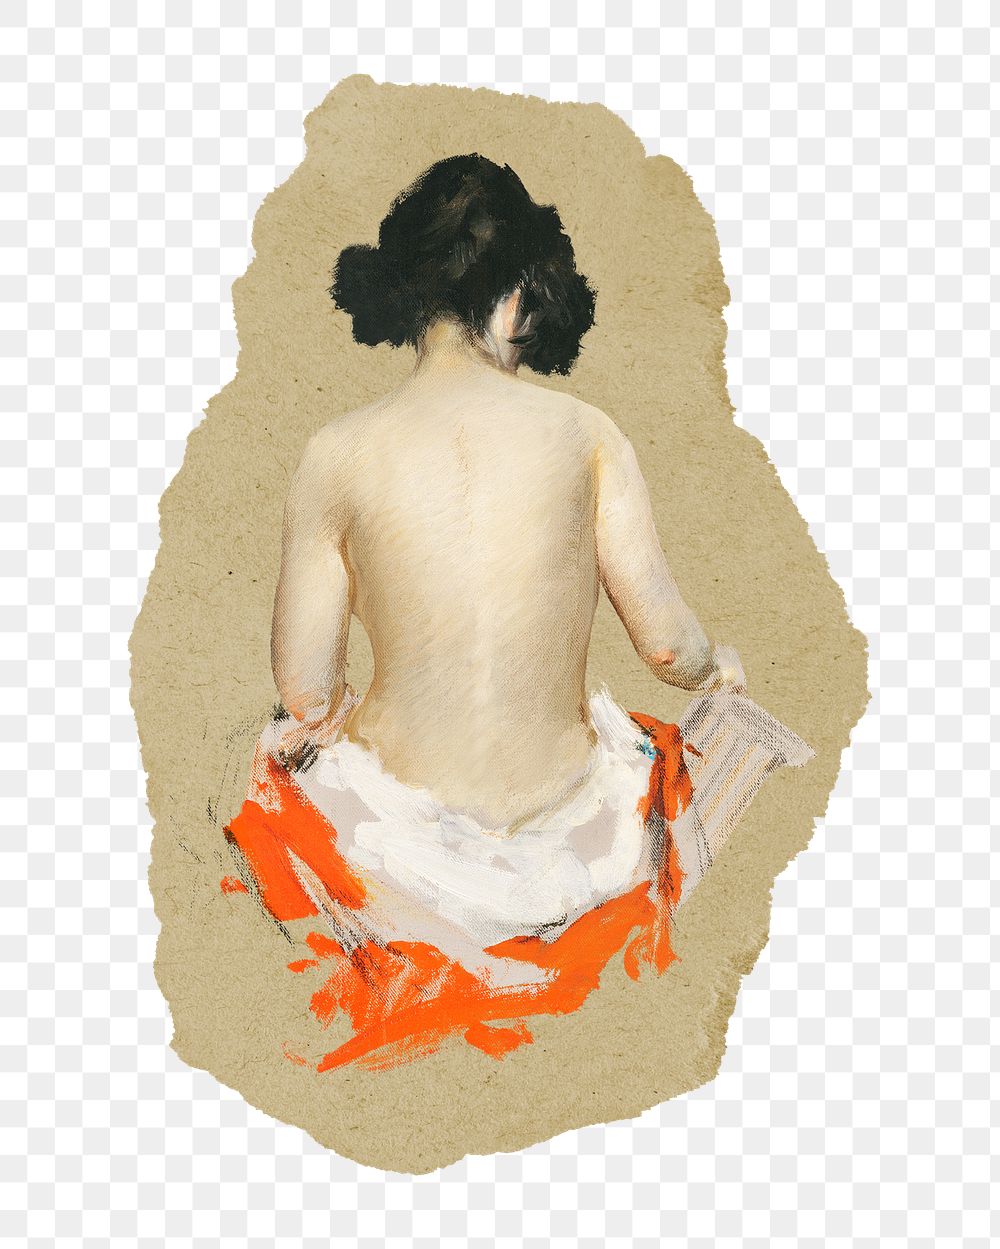 Png naked Japanese woman sticker, vintage artwork, transparent background, ripped paper badge